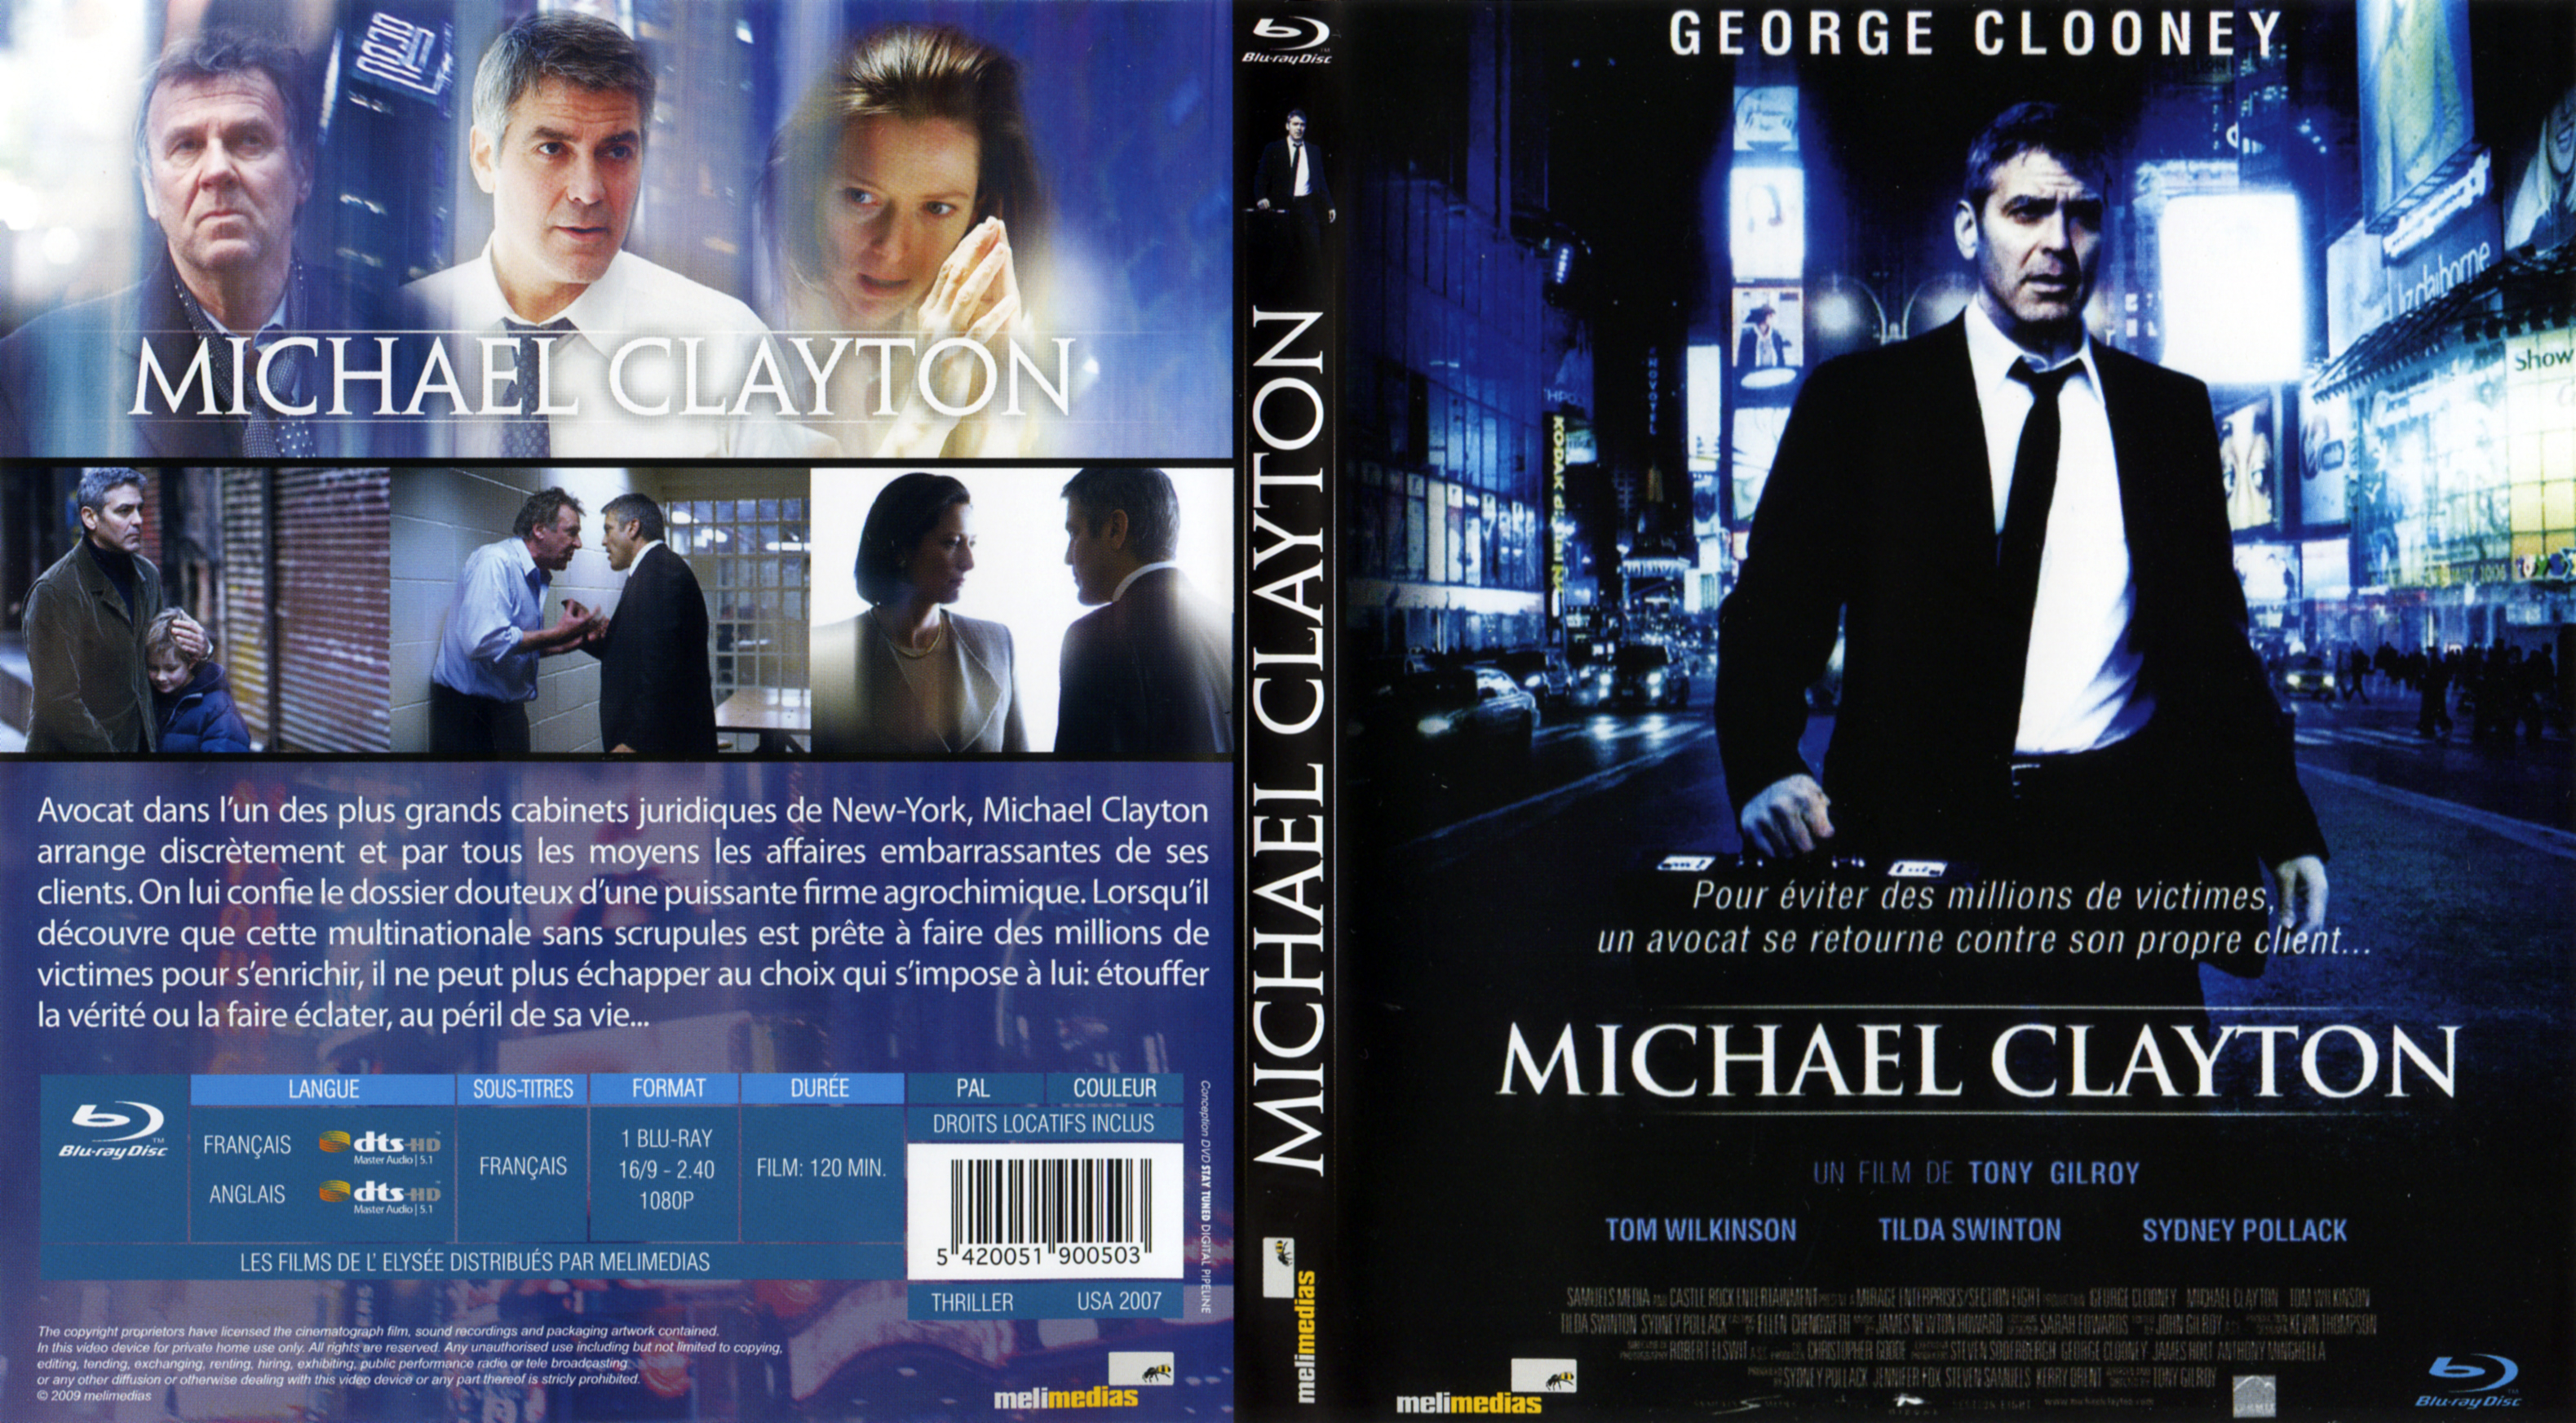 Jaquette DVD Michael Clayton (BLU-RAY) v2